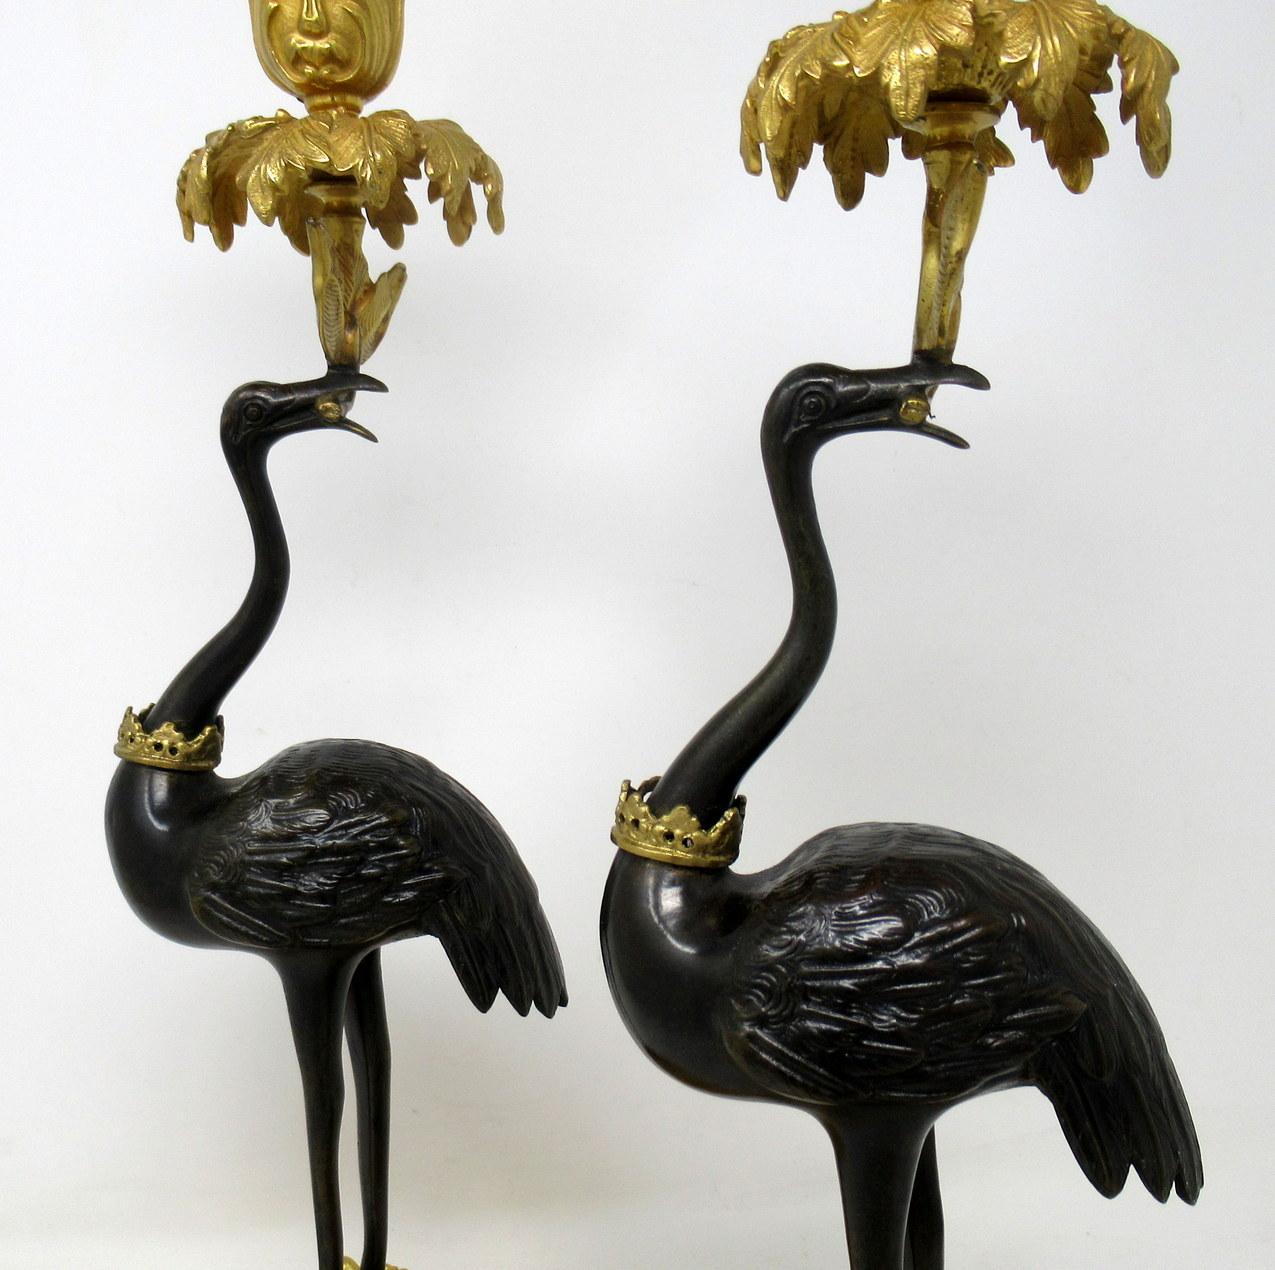 19th Century Antique Pair of English Ormolu Gilt Bronze Candlesticks Storks Cranes by Abbott